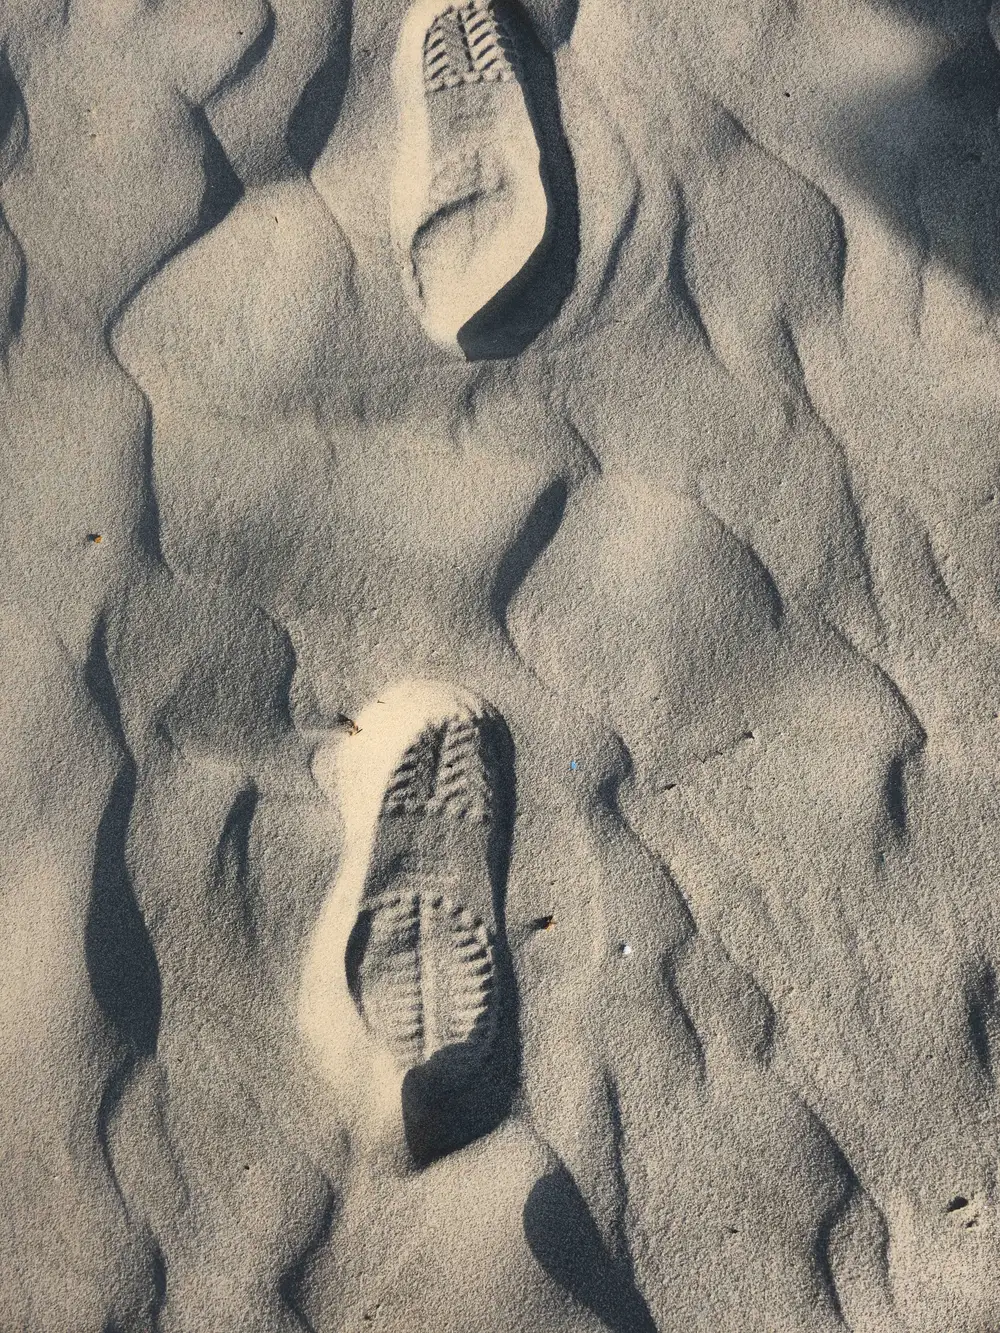 Shoe prints on sand